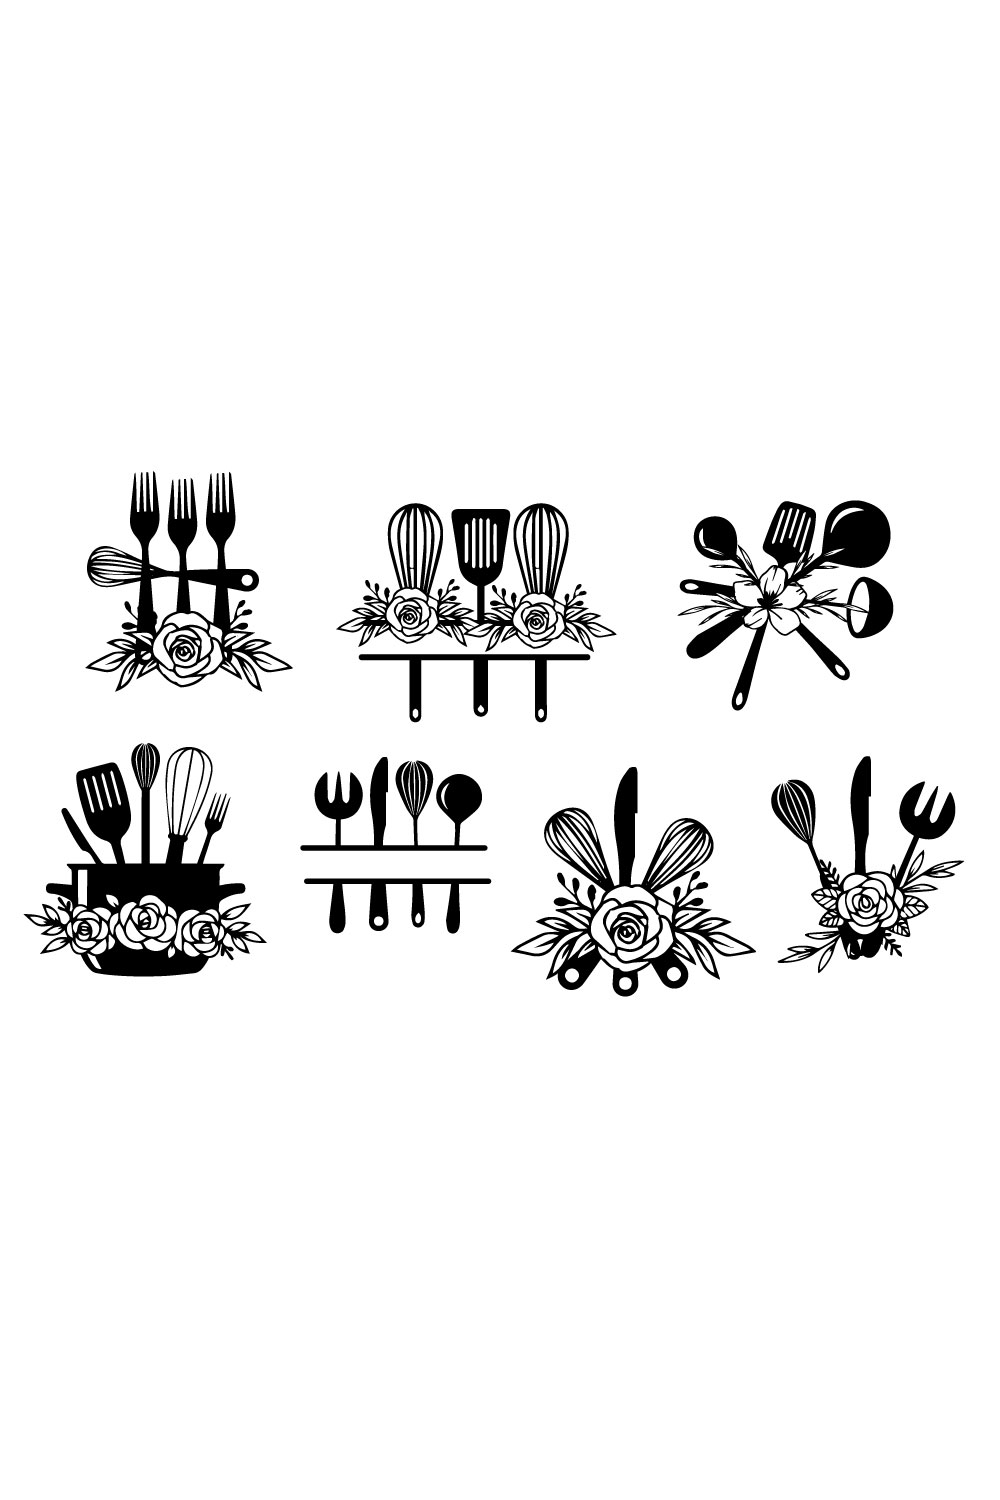 Pack of black irresistible kitchen utensils images